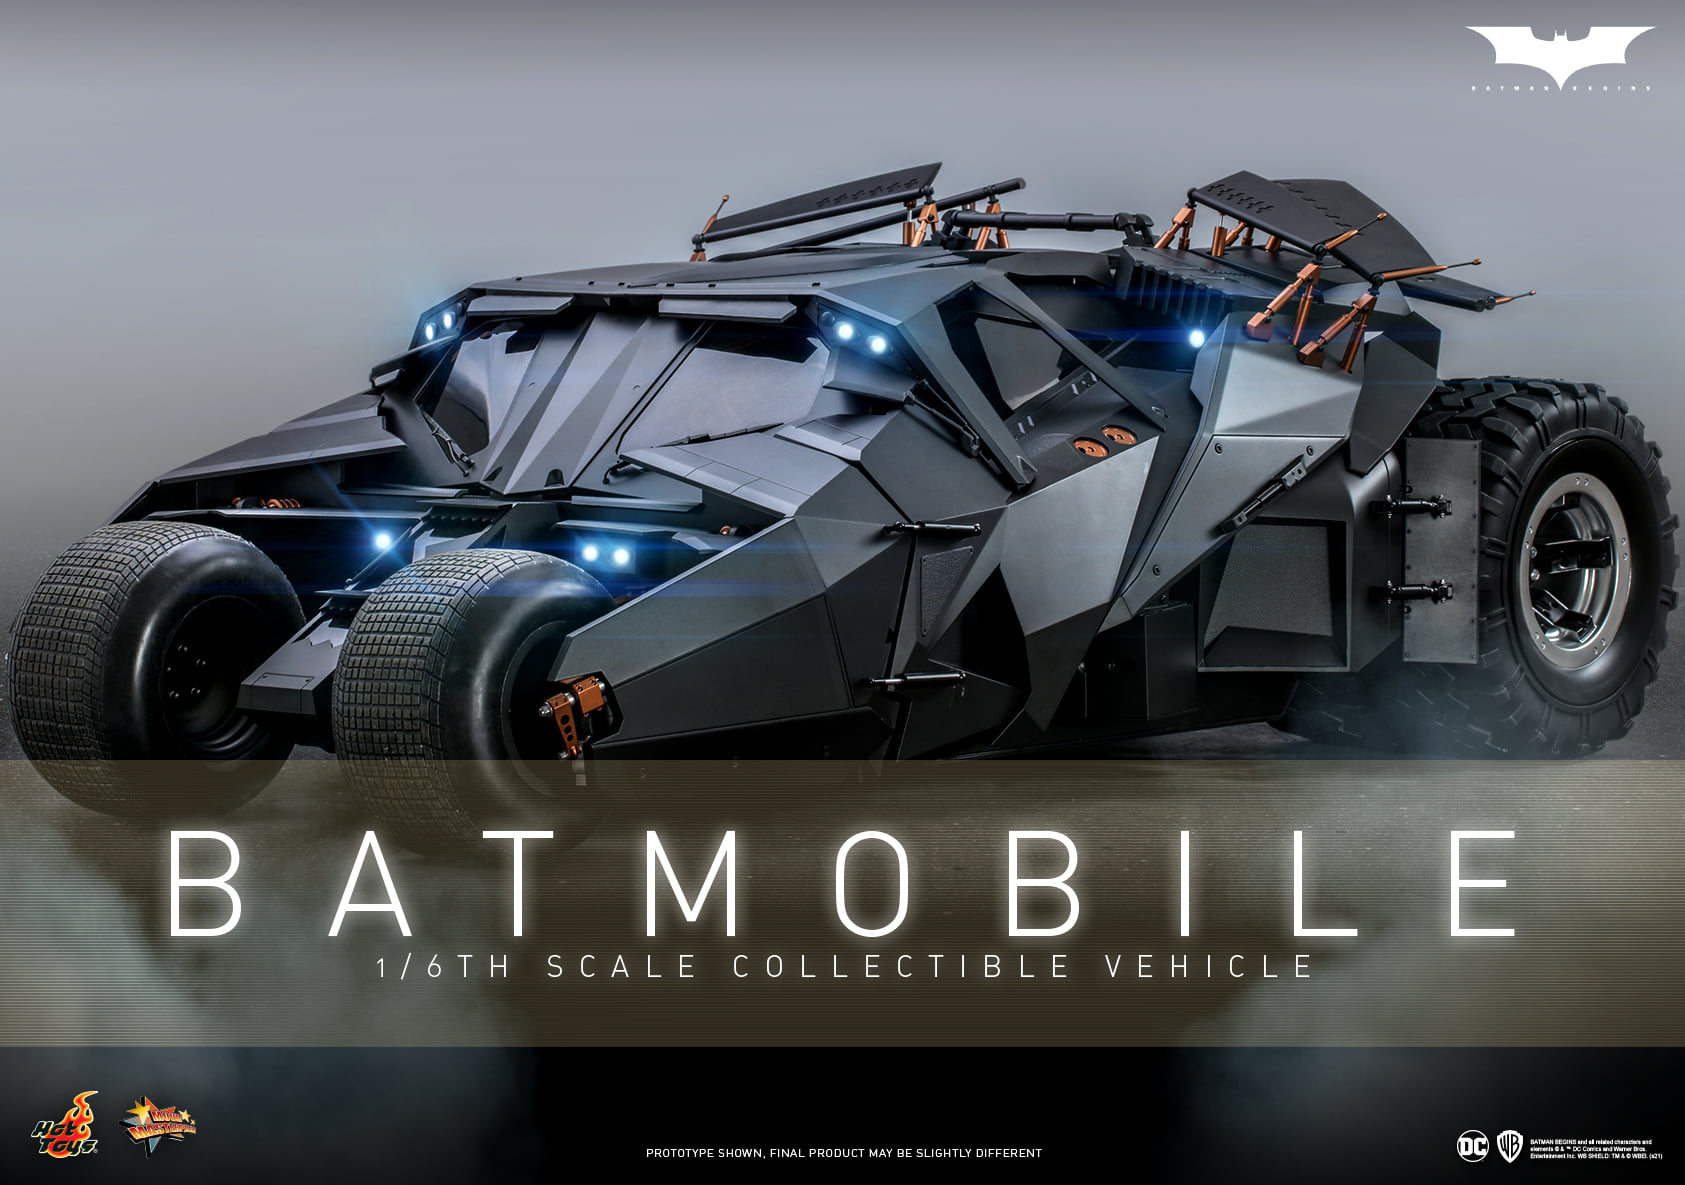 Hot Toys DC Comics Batman Begins Batmobile Sixth Scale Vehicle